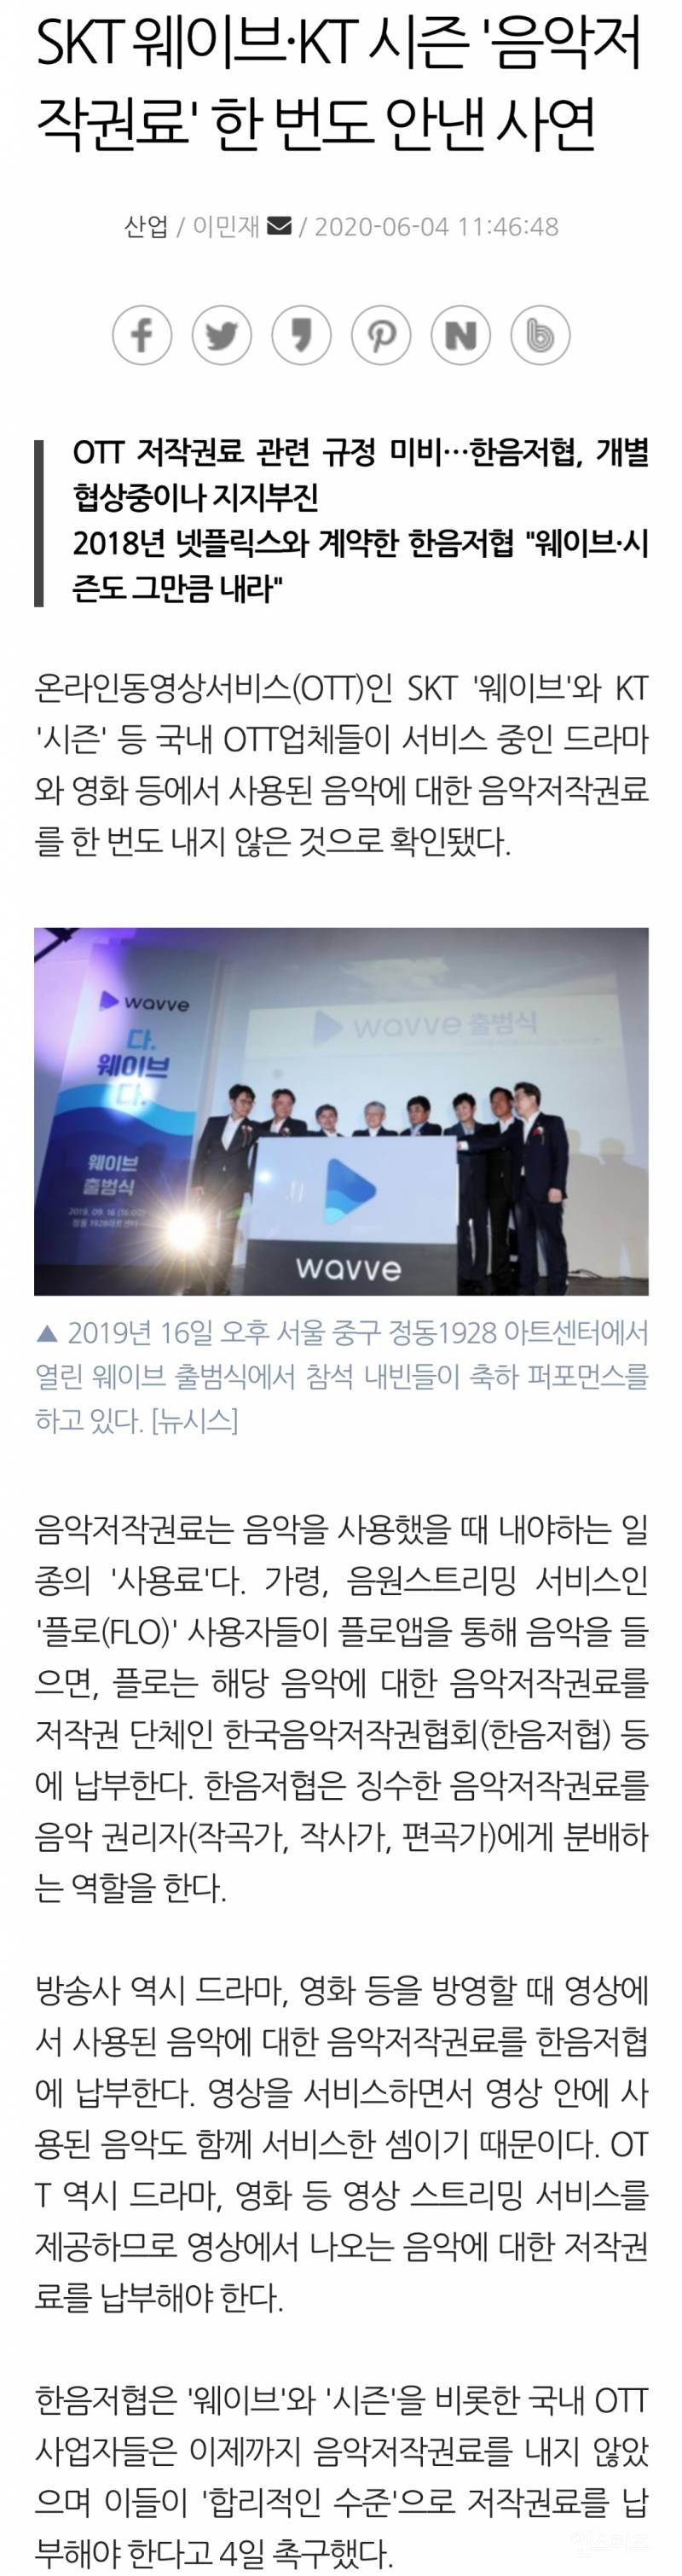 SKT 웨이브, KT 시즌 '음악저작권료' 한 번도 안낸 사연 | 인스티즈